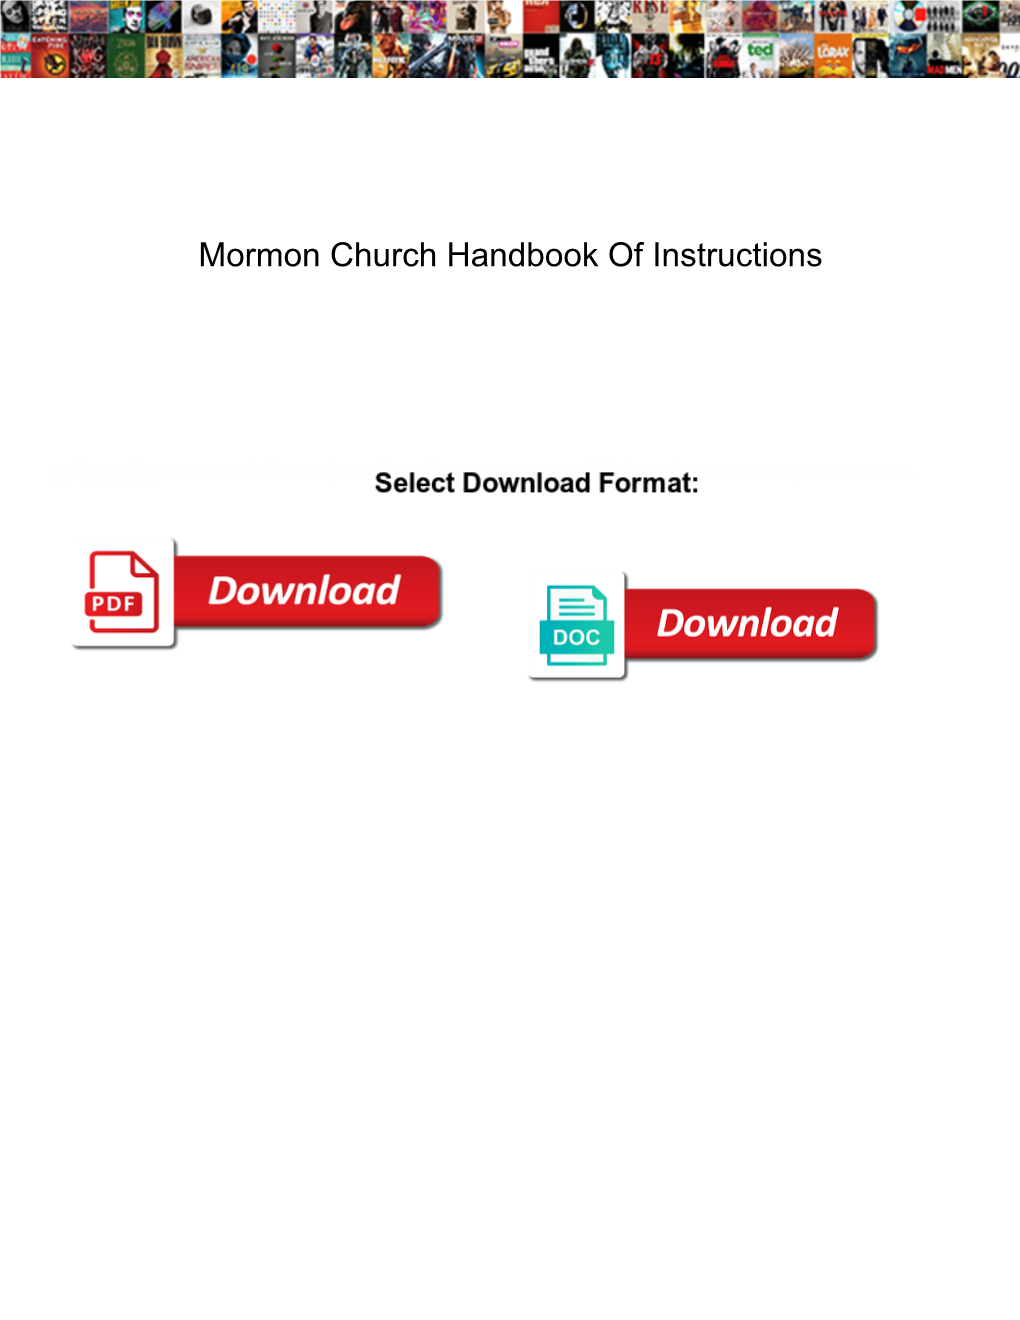 Mormon Church Handbook of Instructions